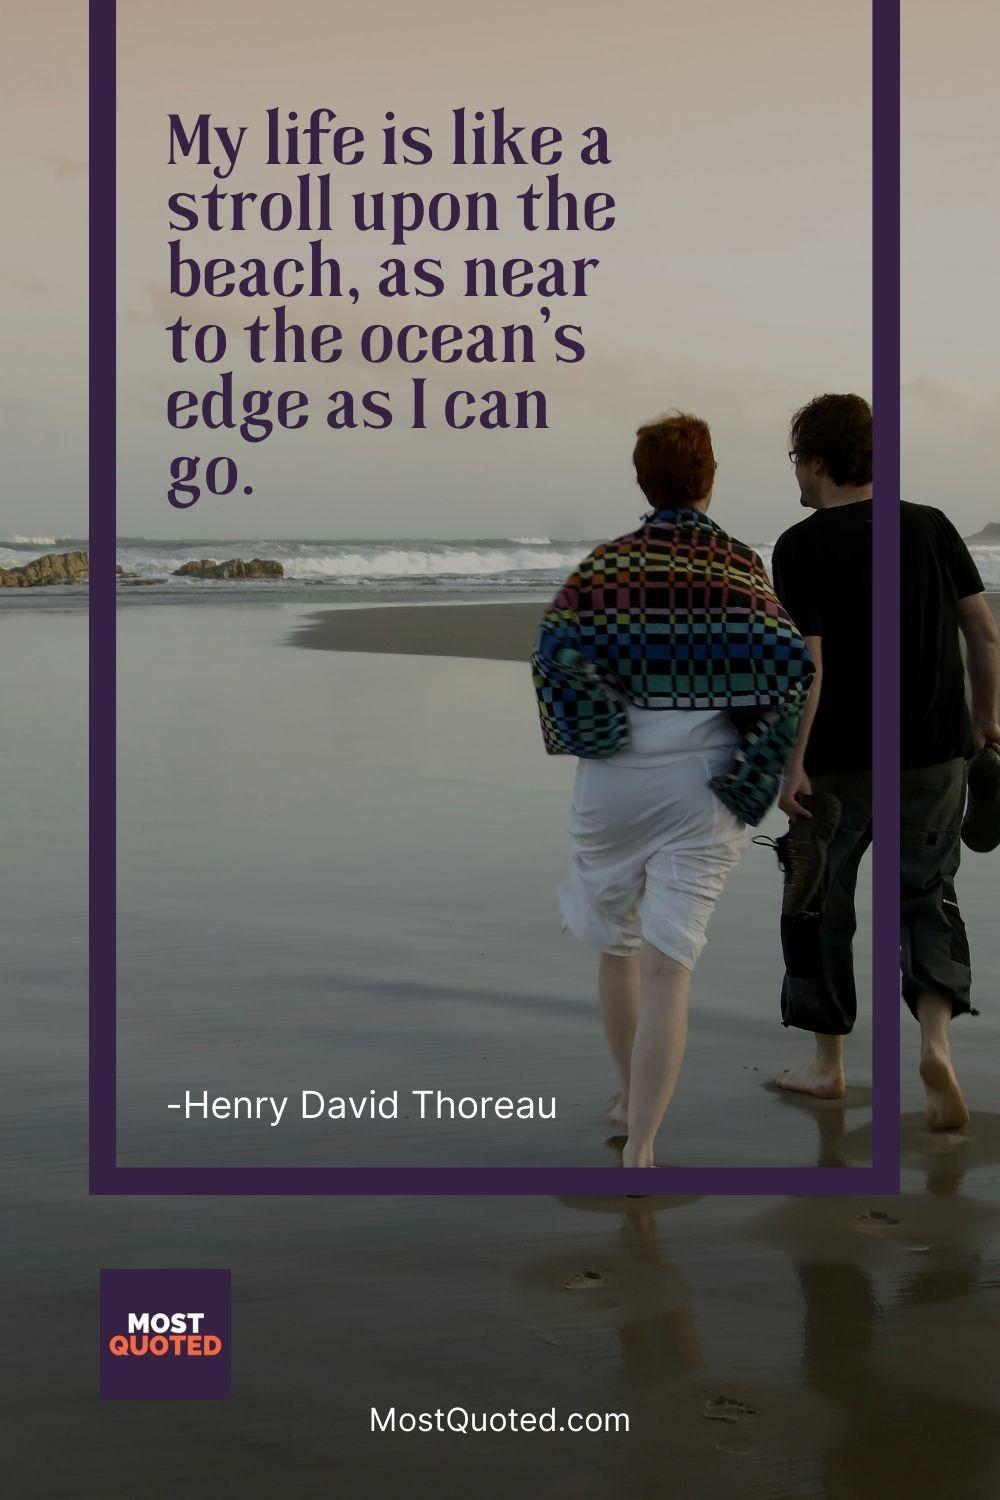 My life is like a stroll upon the beach, as near to the ocean’s edge as I can go. - Henry David Thoreau